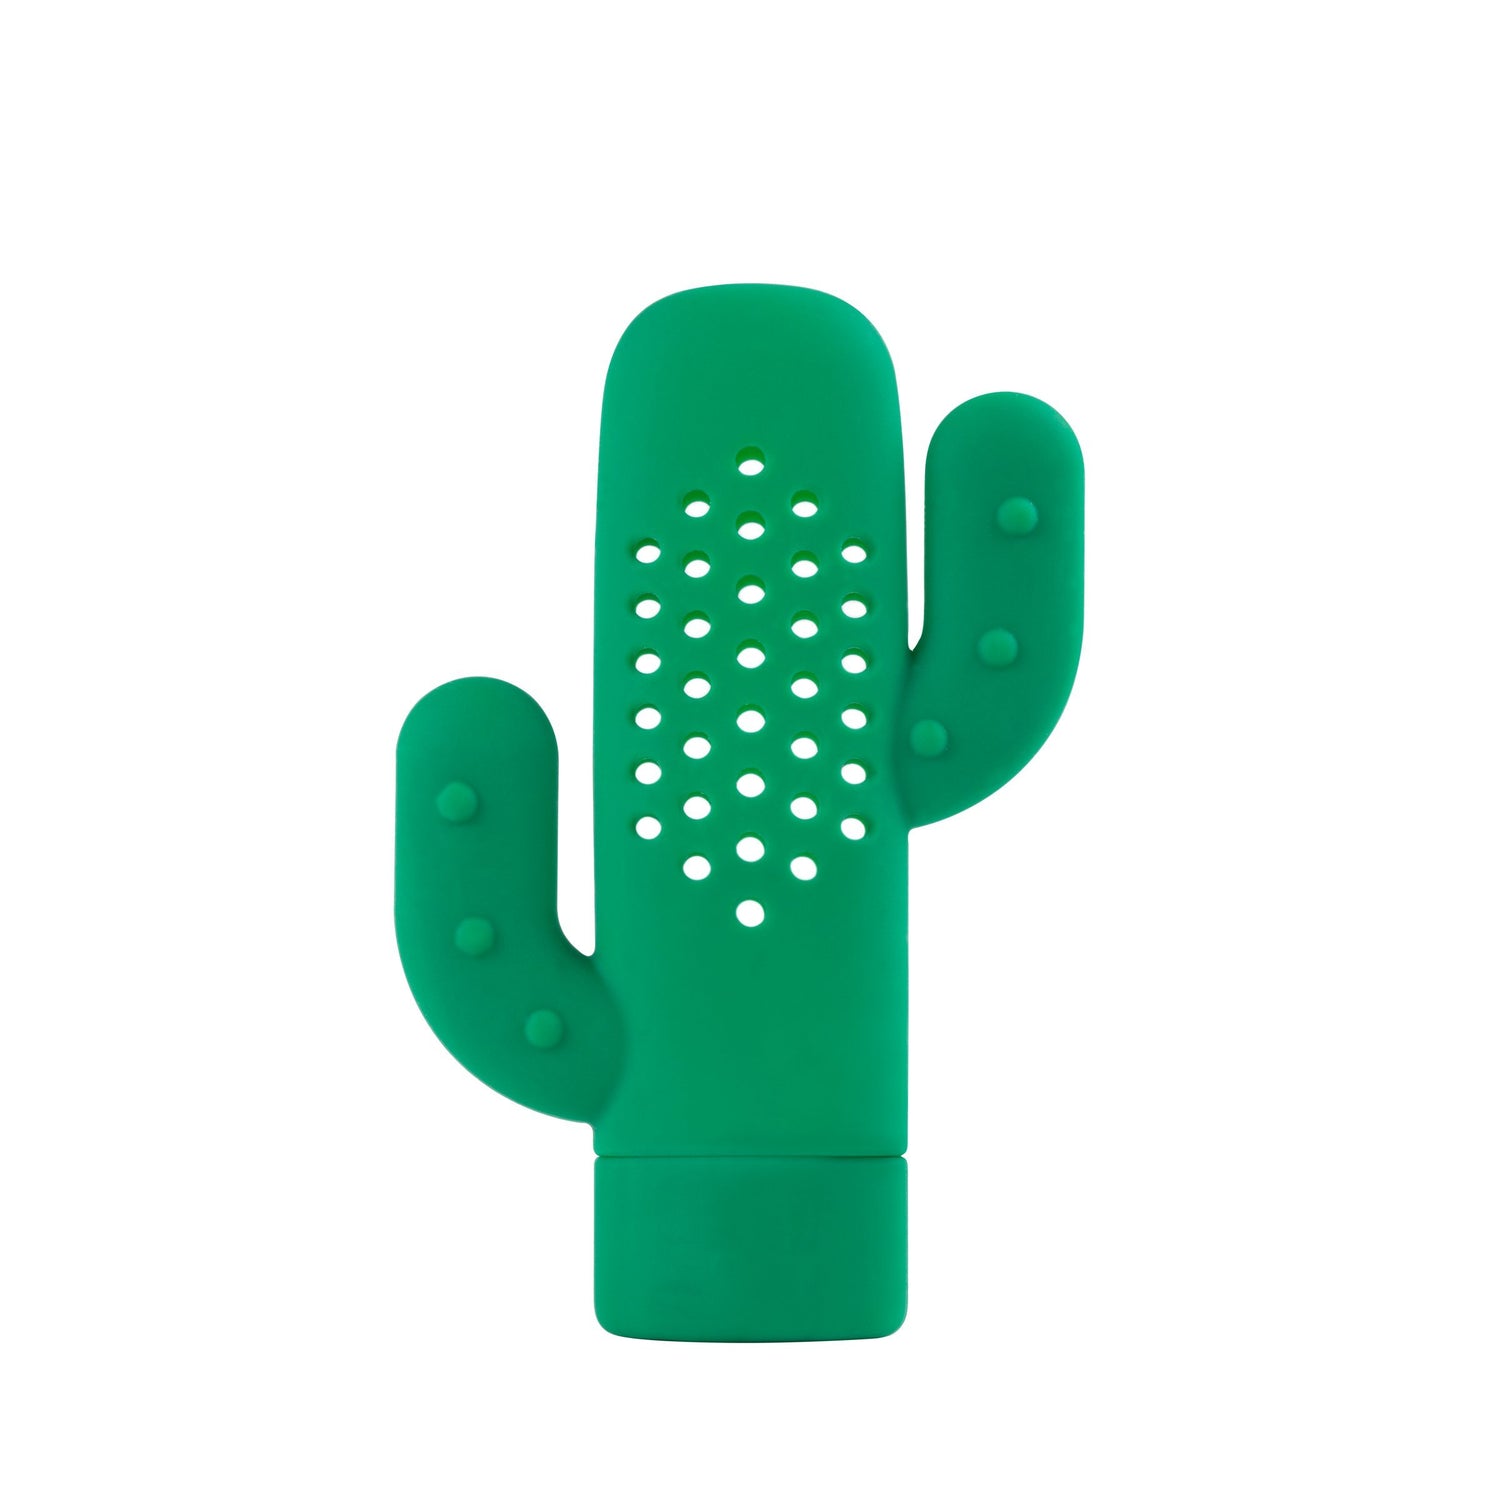 Infuser ziołowy z kaktusem (Cactus Herb Infuser)